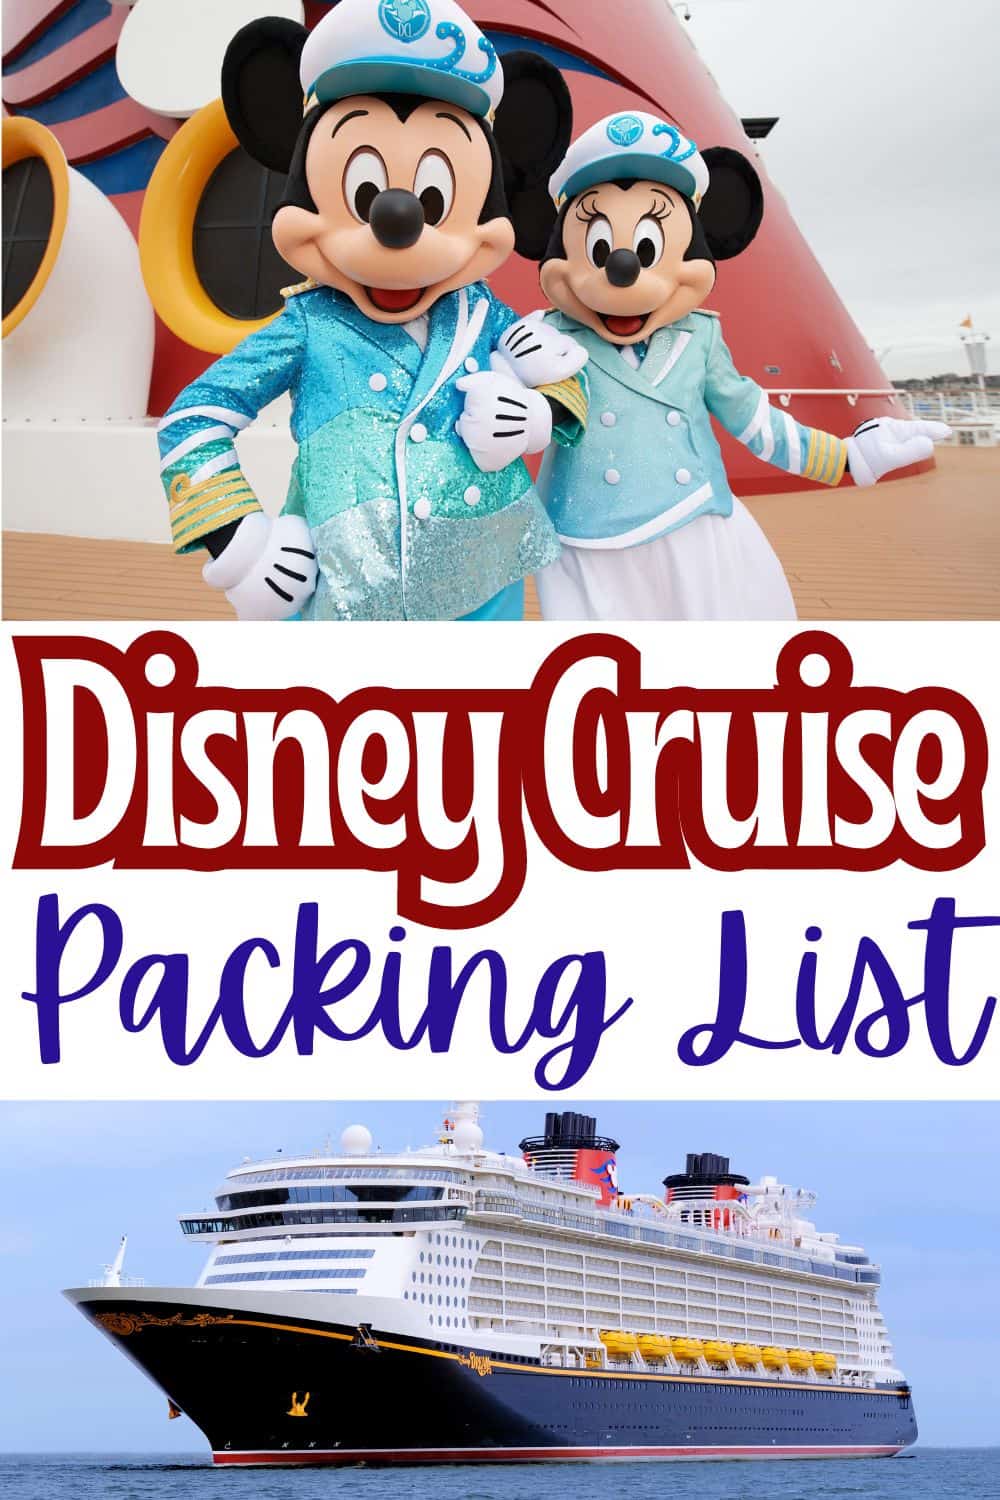 18 BEST Disney Cruise Packing List Items